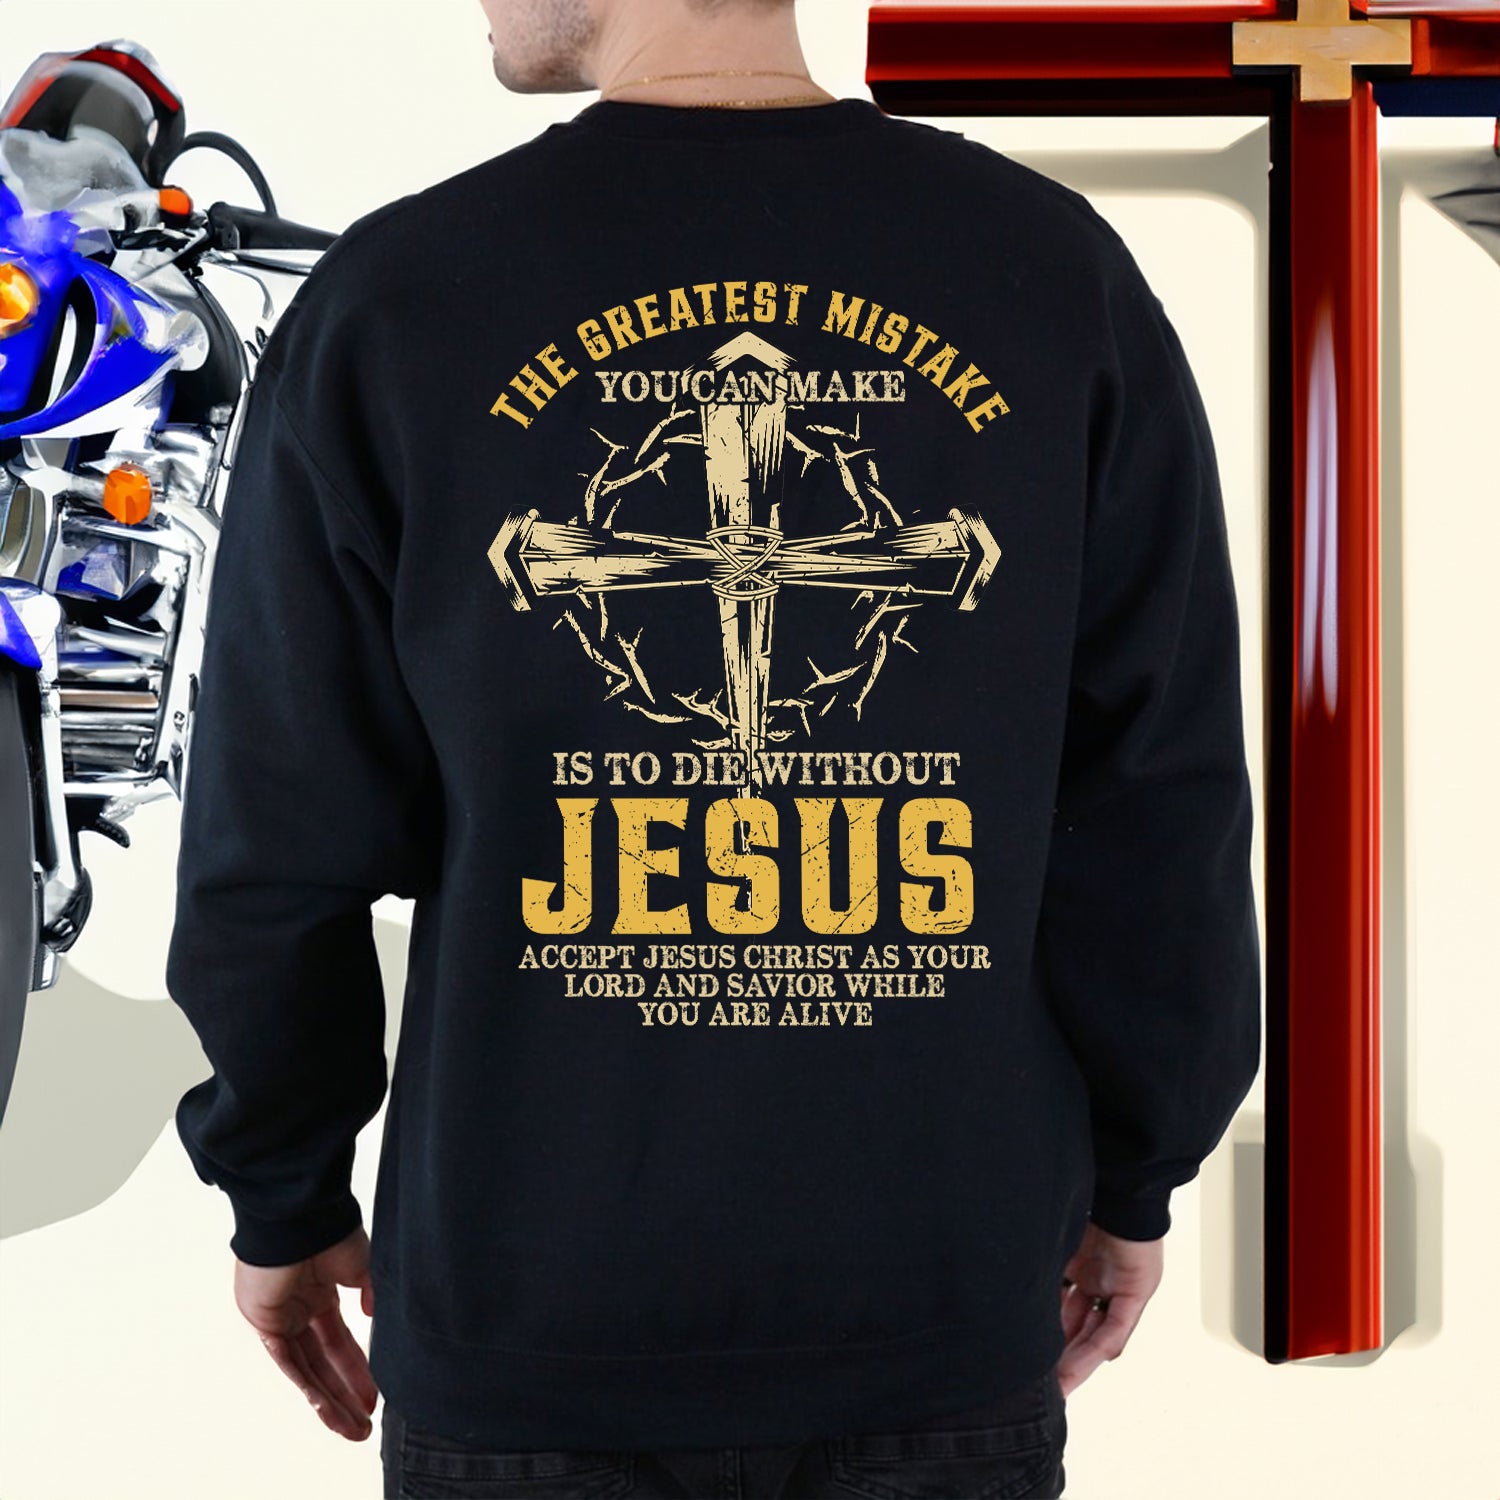 Teesdily | Jesus Cross Crown Shirt, The Greastest Mistake You Can Make Is To Die Without Jesus, Christian Gifts Unisex Tshirt Hoodie Sweatshirt Mug